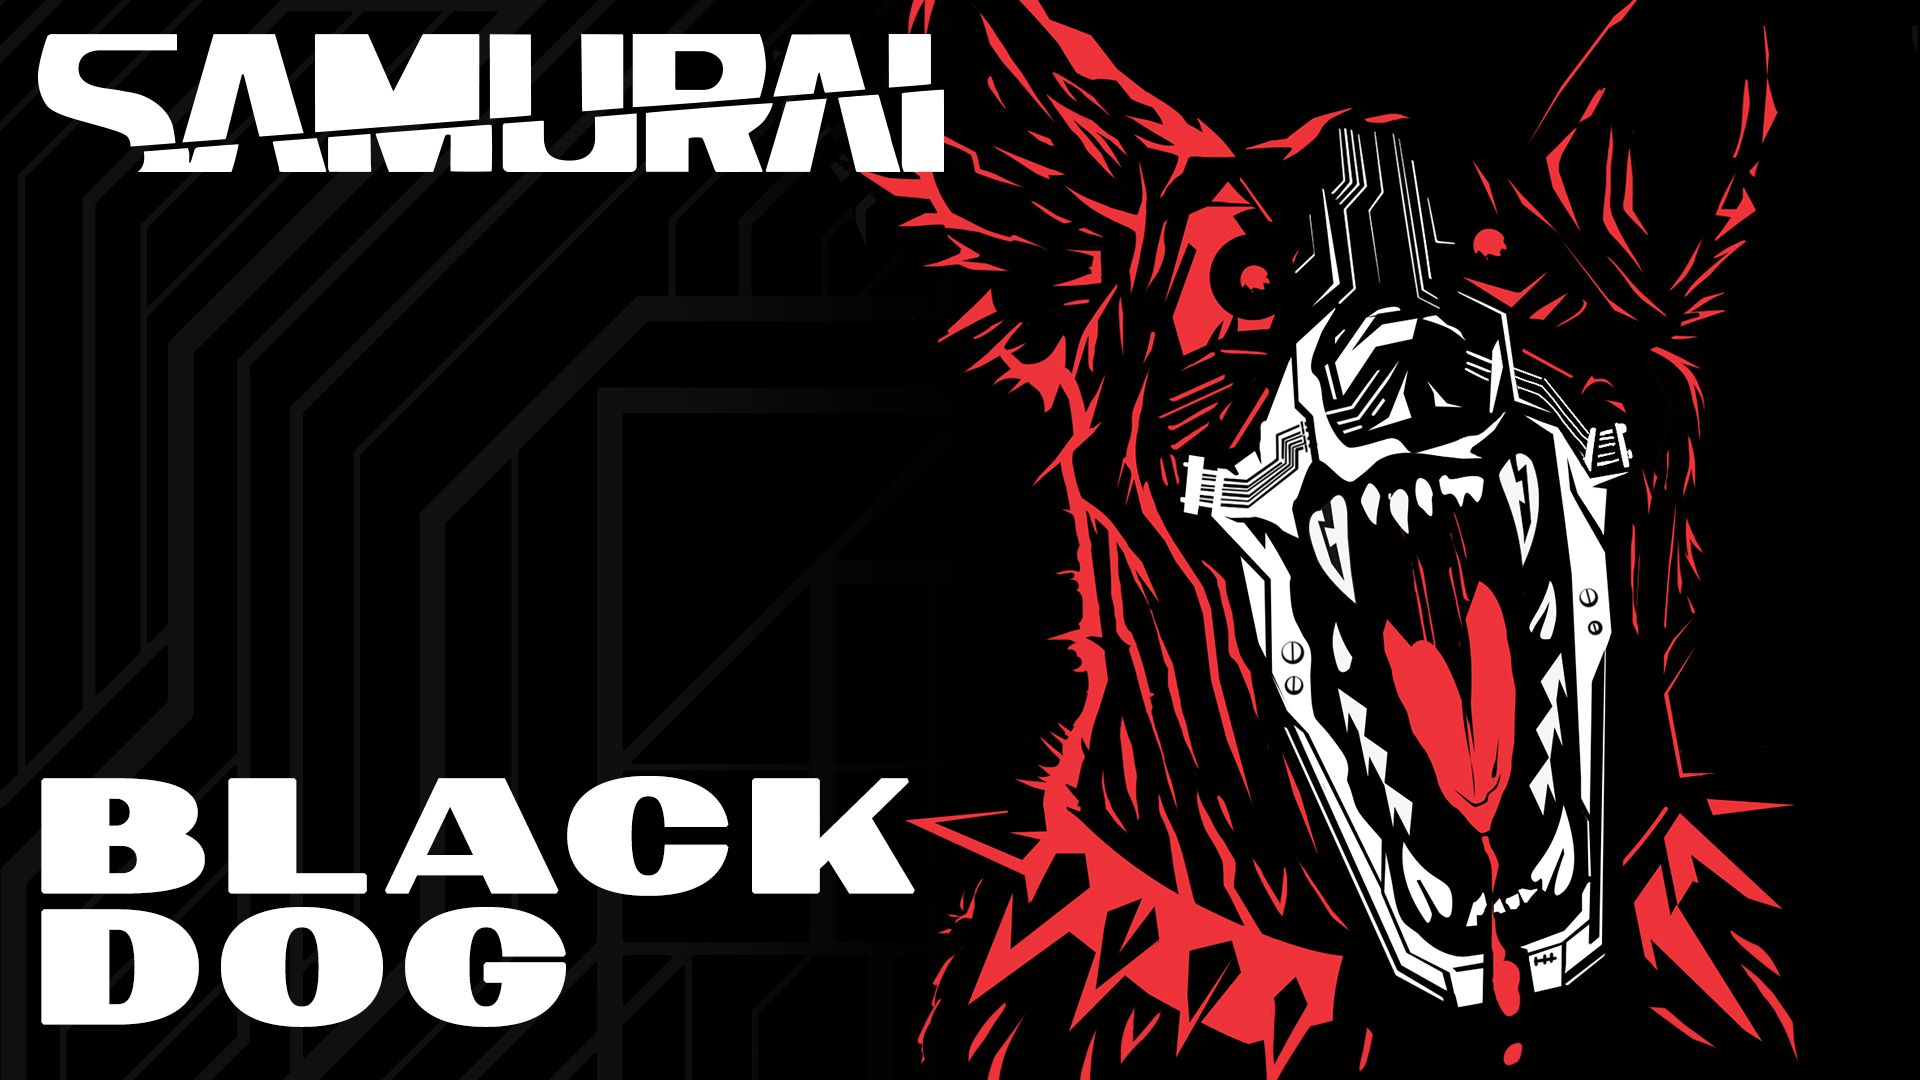 Black Dog - SAMURAI (Refused) - Cyberpunk 2077 от создателей игры.